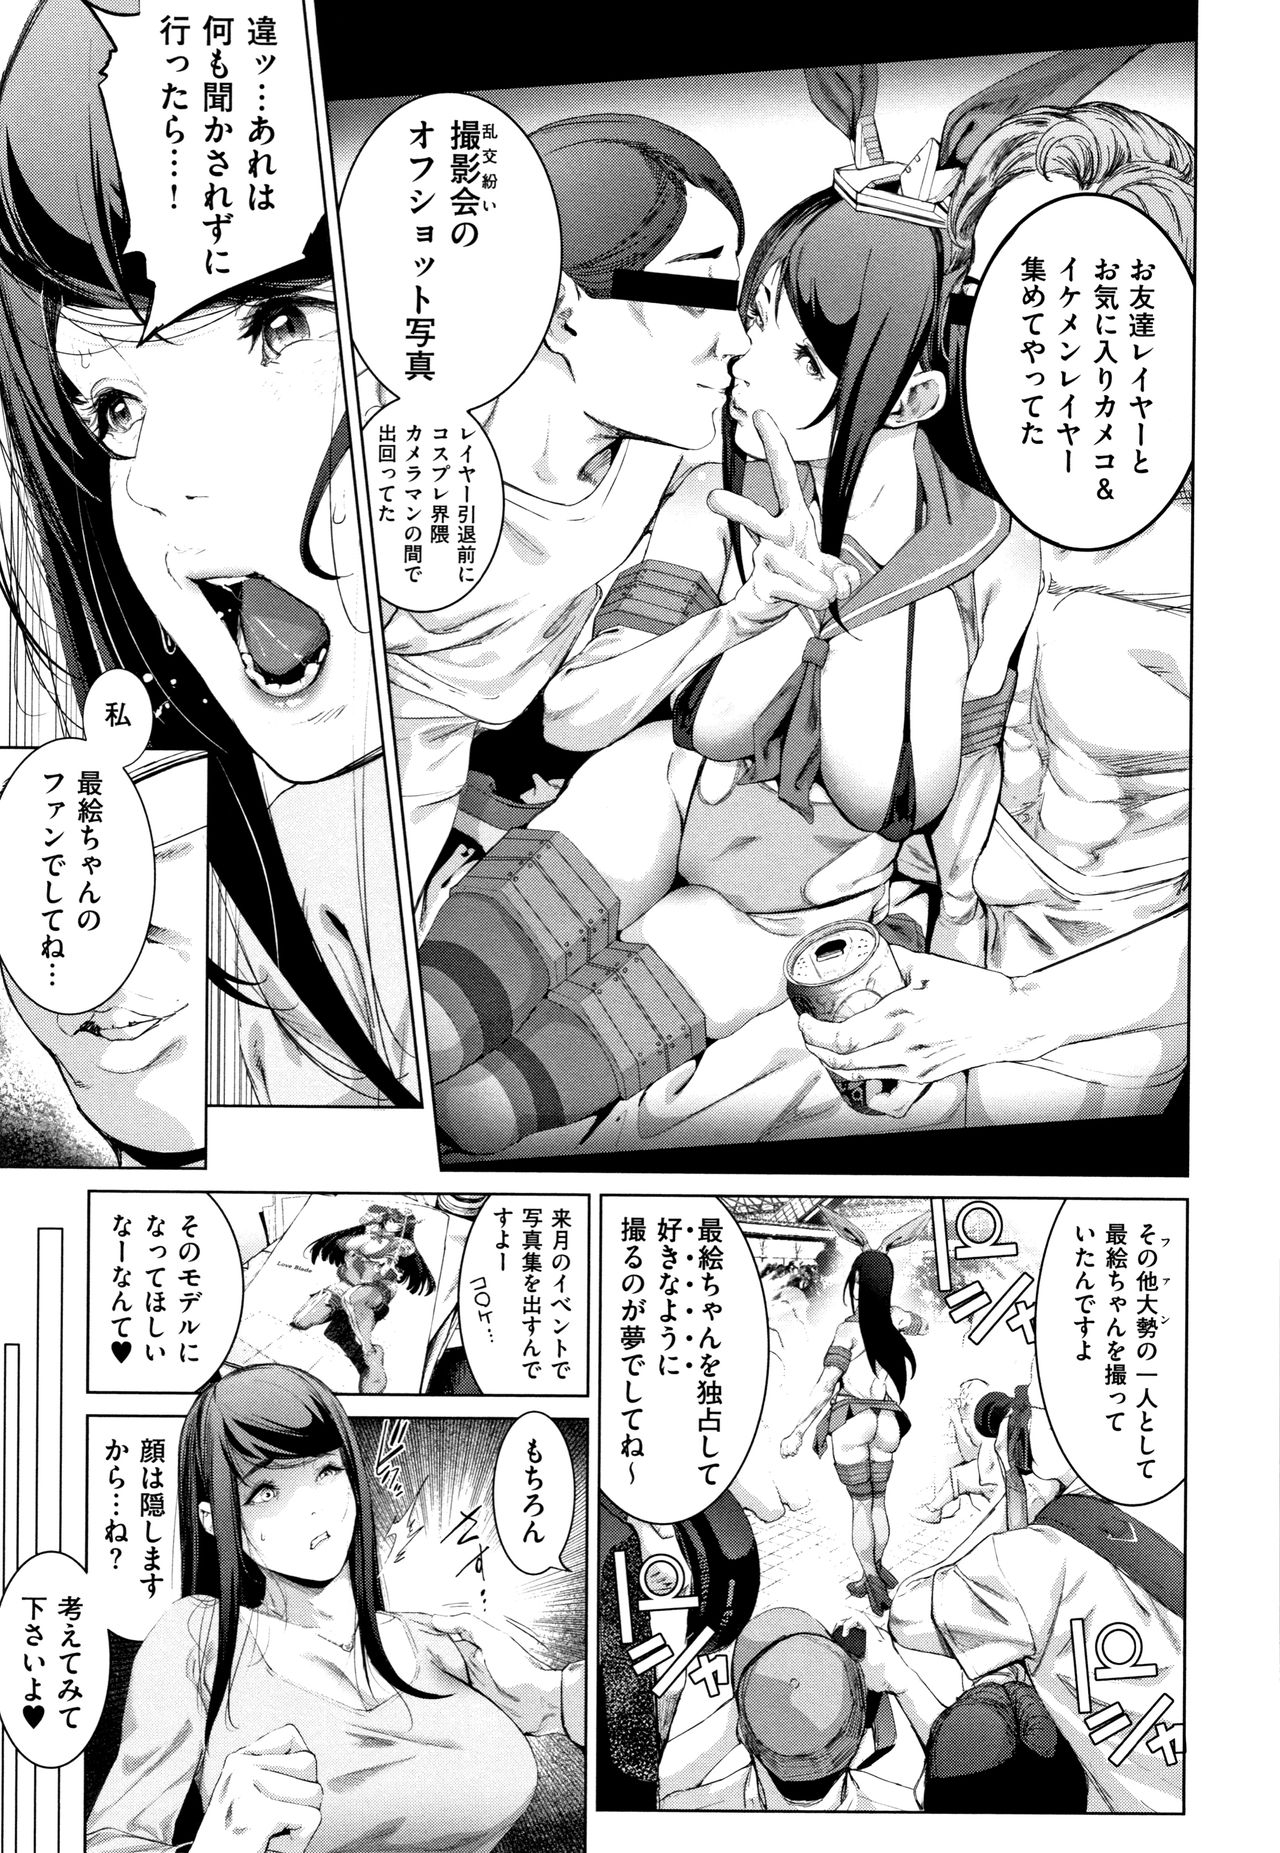 [Suzuhane Suzu] Cos wa Midara na Kamen Shogyouban - Cosplay is a mask [wakes up erotic personality...] 41